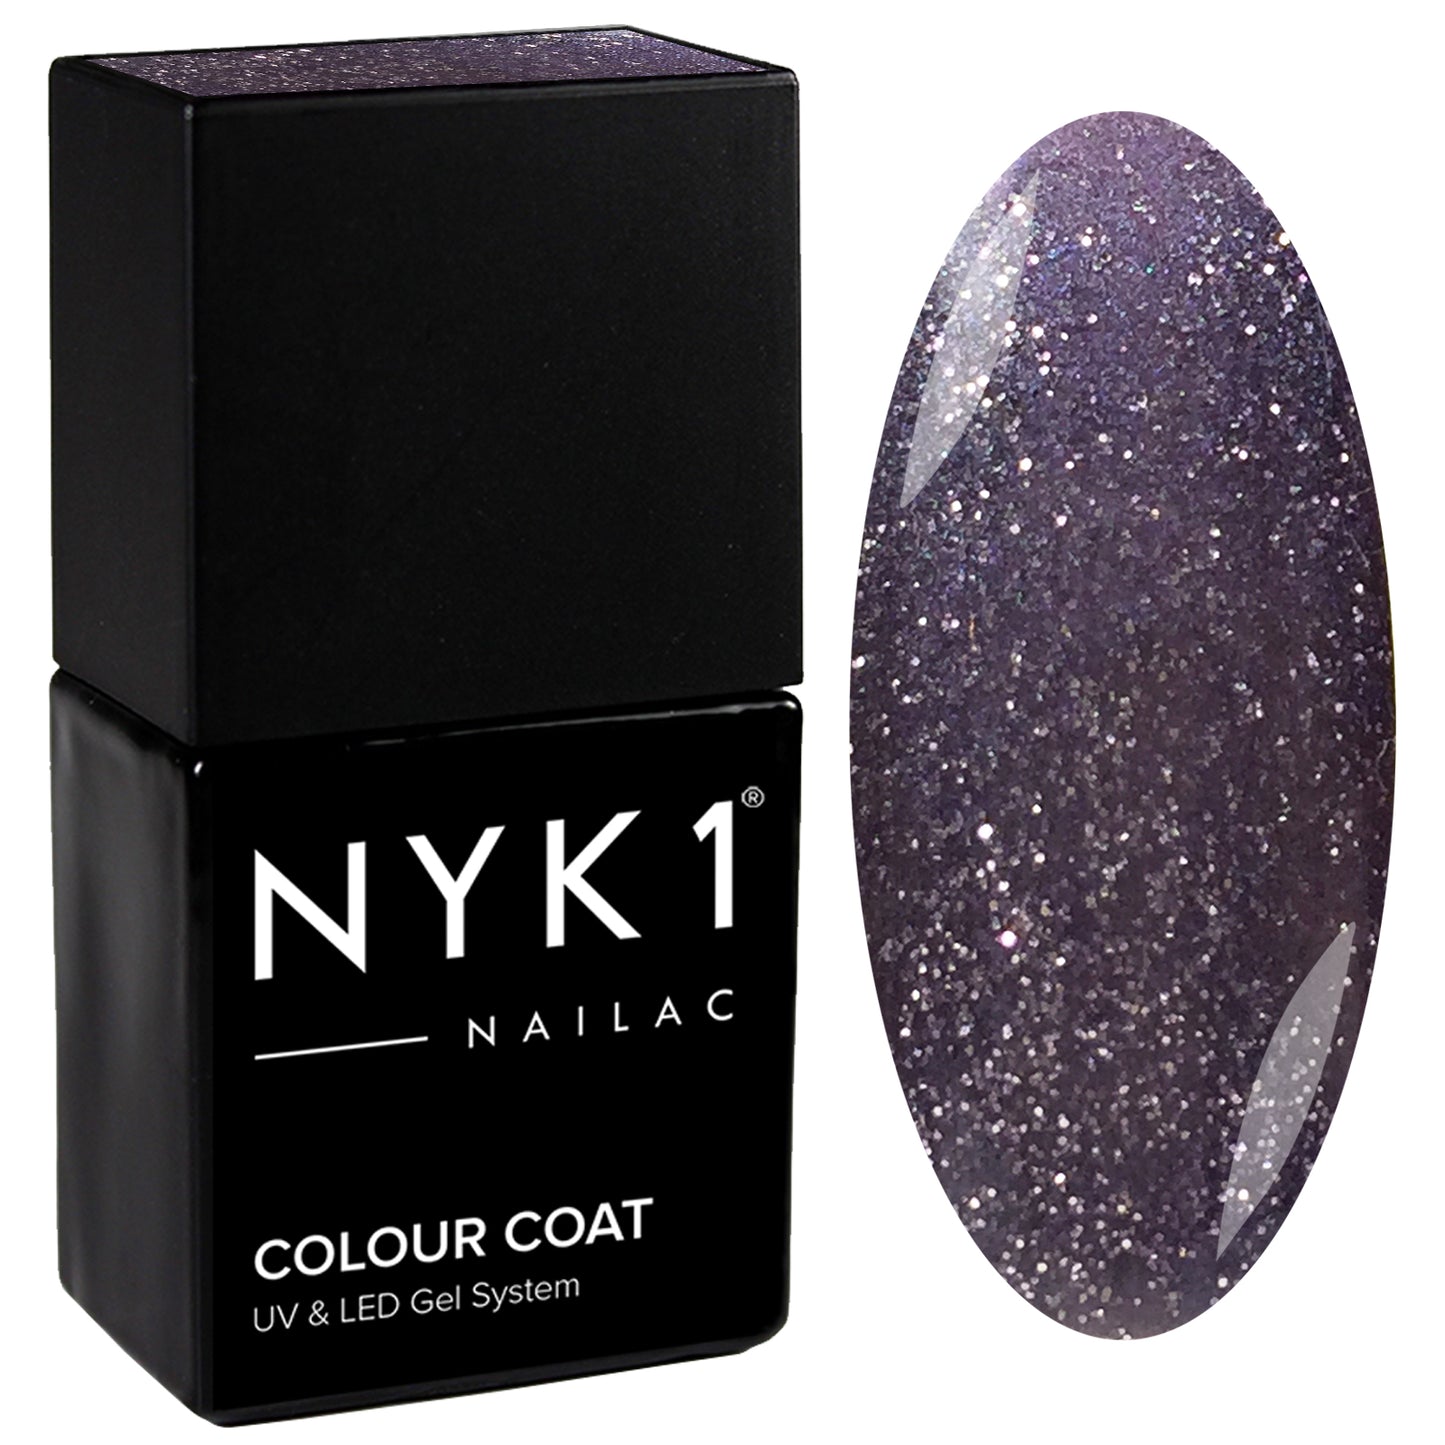 NYK1 Quartz Purple Lilac Glitter Sparkle Gel Nail Polish